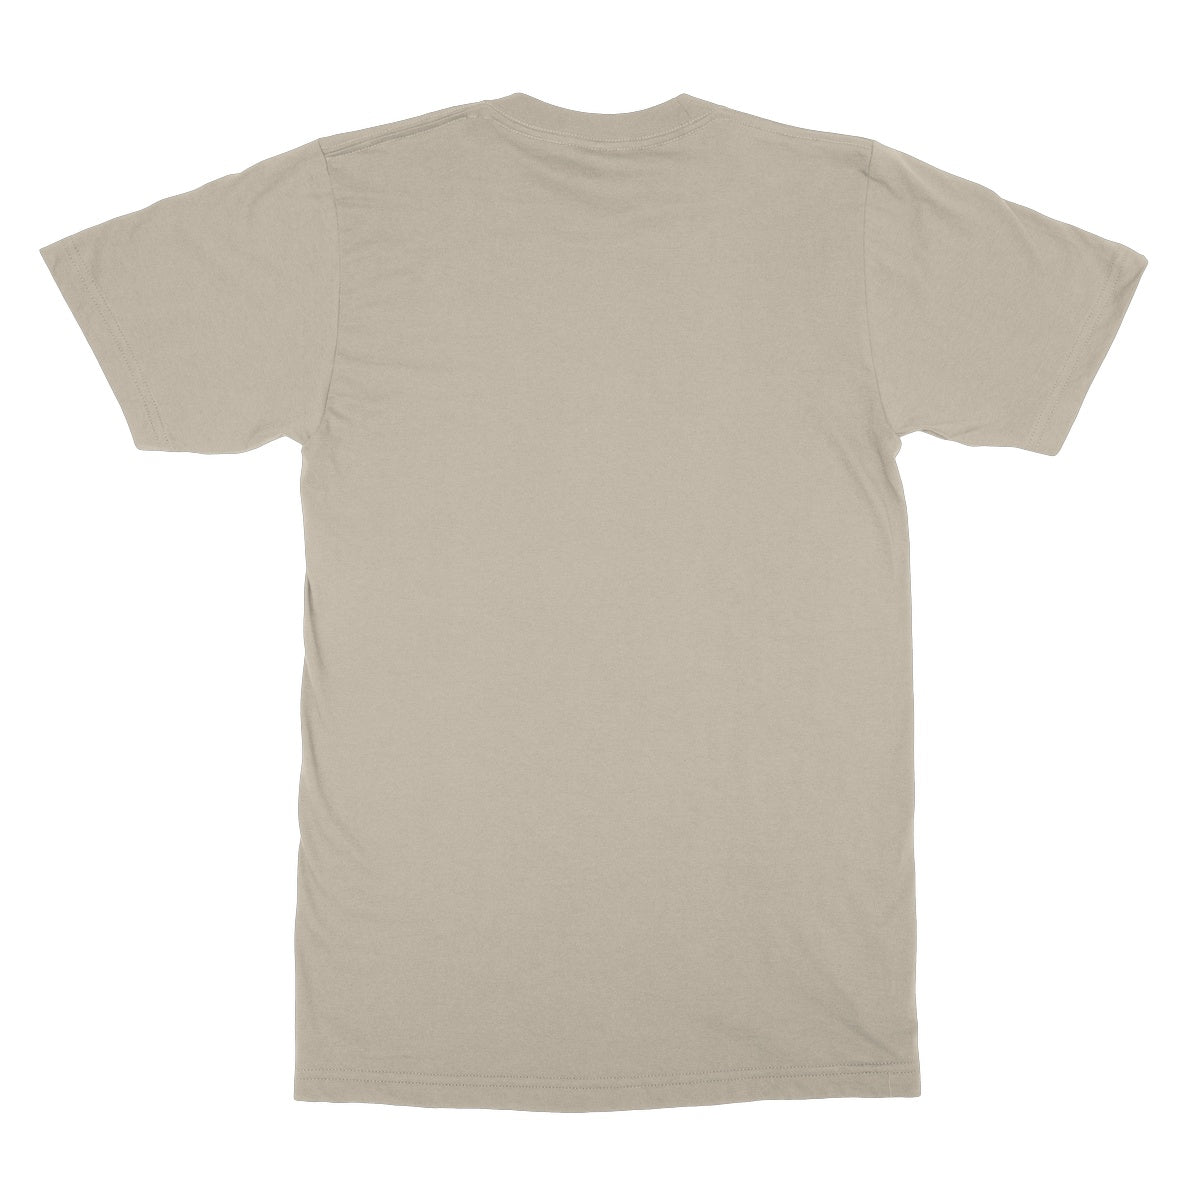 Ellipsoid Geodesics, Cool Softstyle T-Shirt